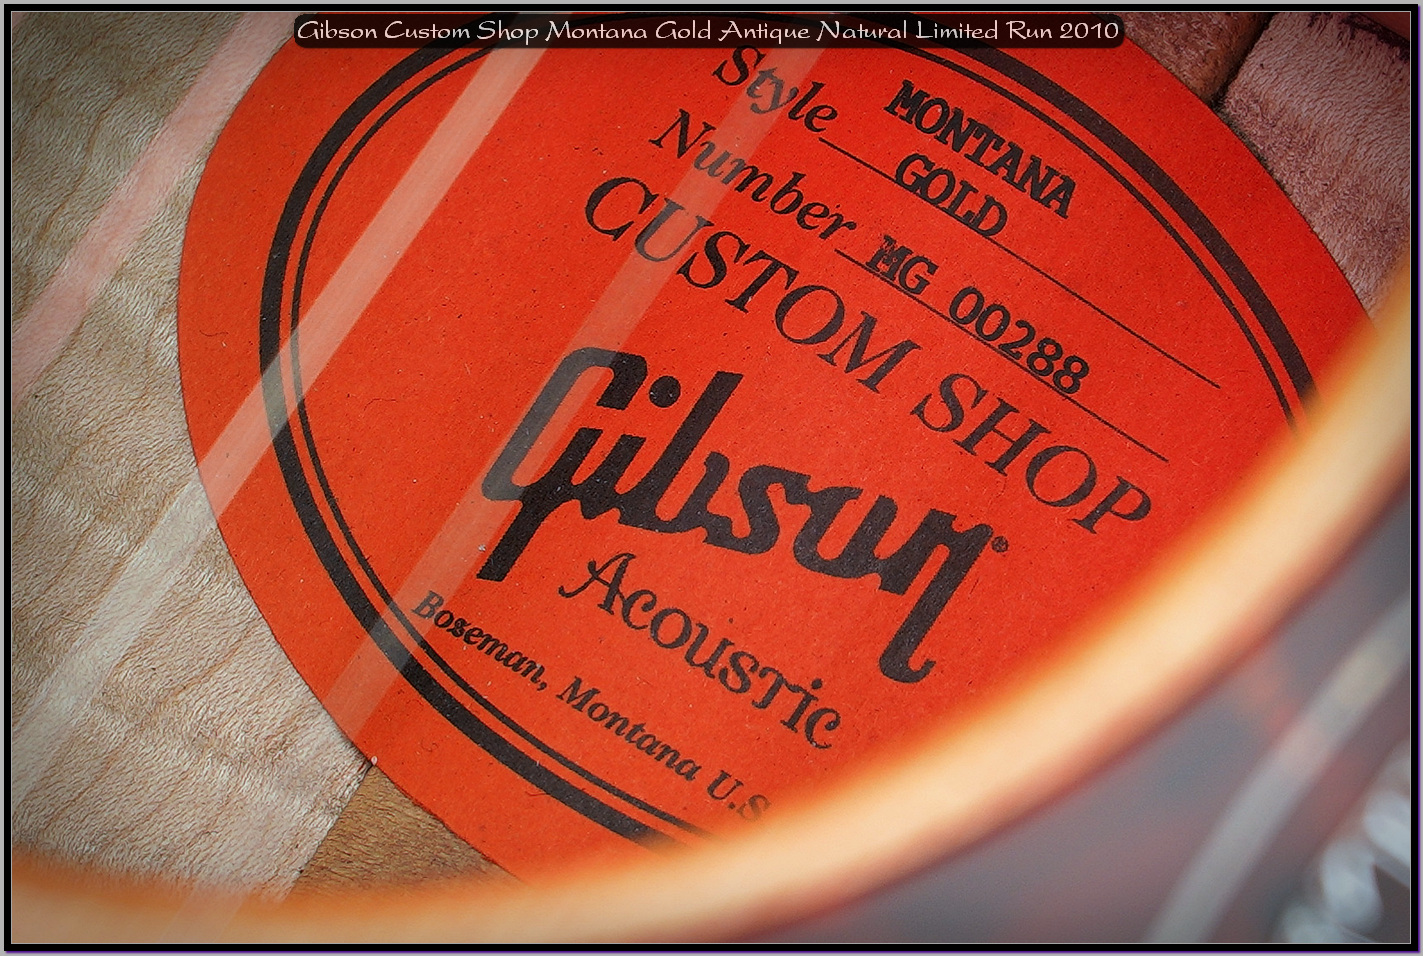 Gibson Custom Shop Montana Gold Antique Natural Limited Run 2010 08_x1400.jpg